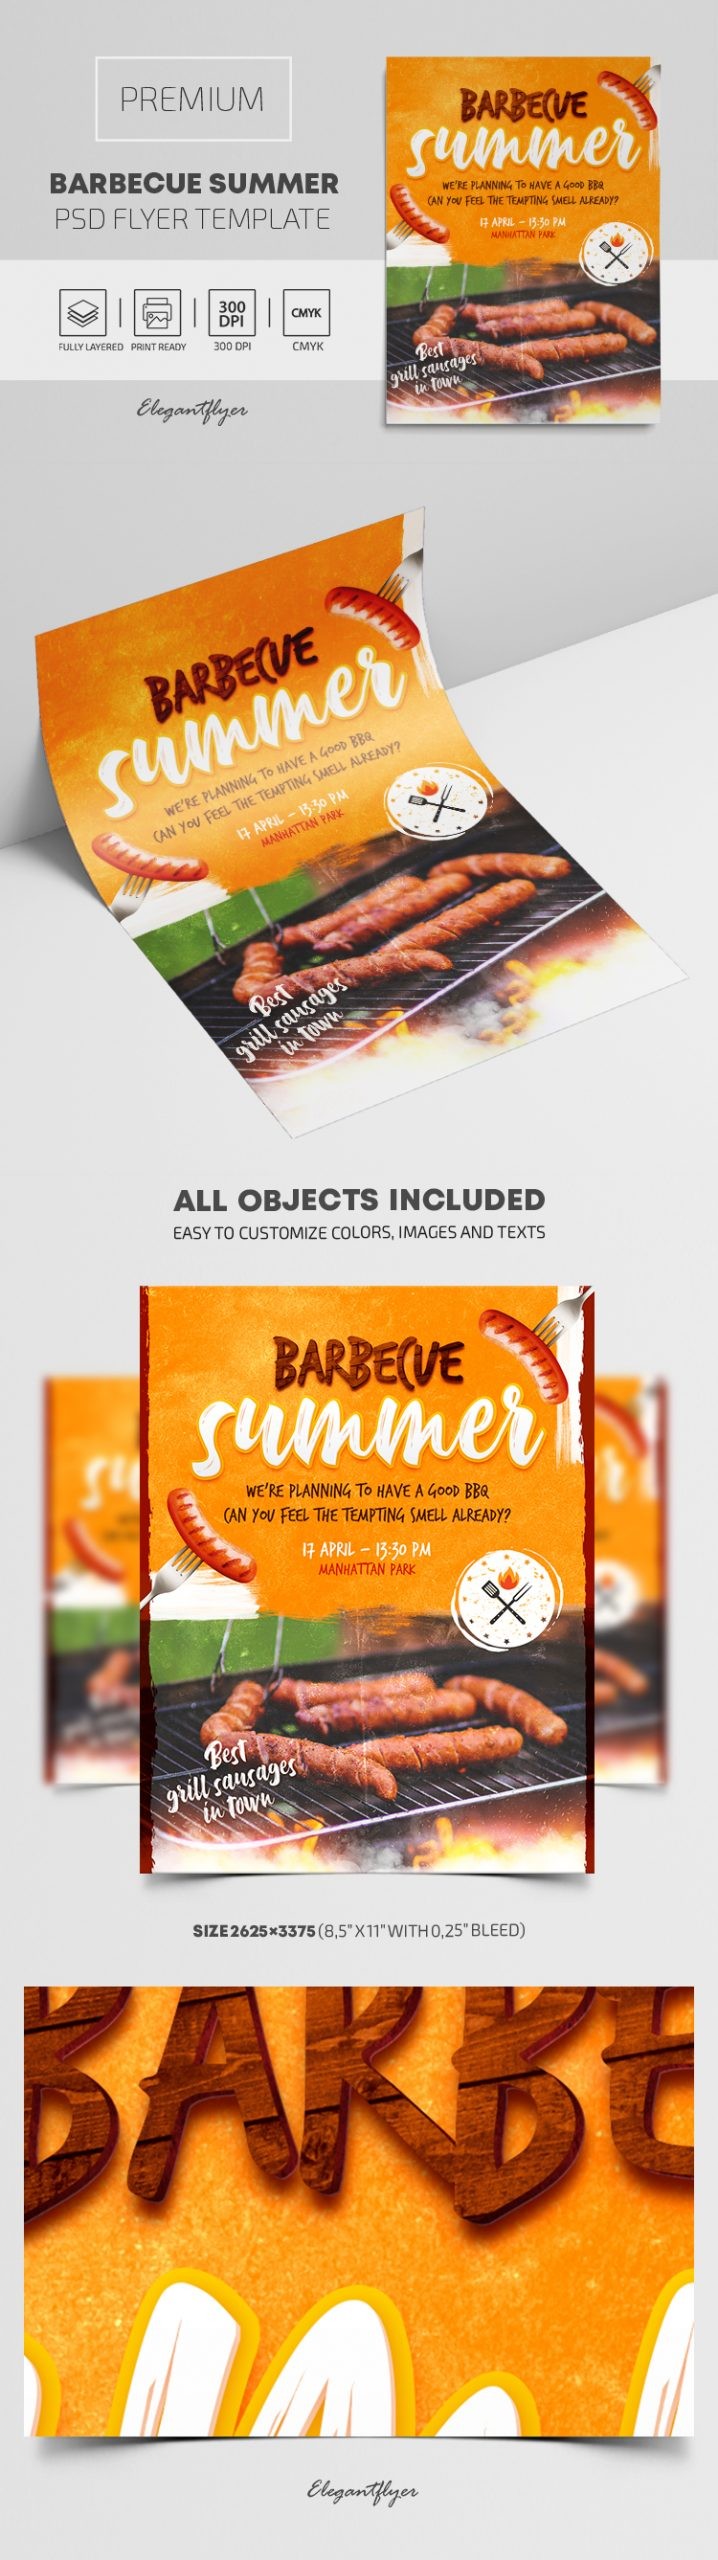 Barbecue Summer Flyer by ElegantFlyer